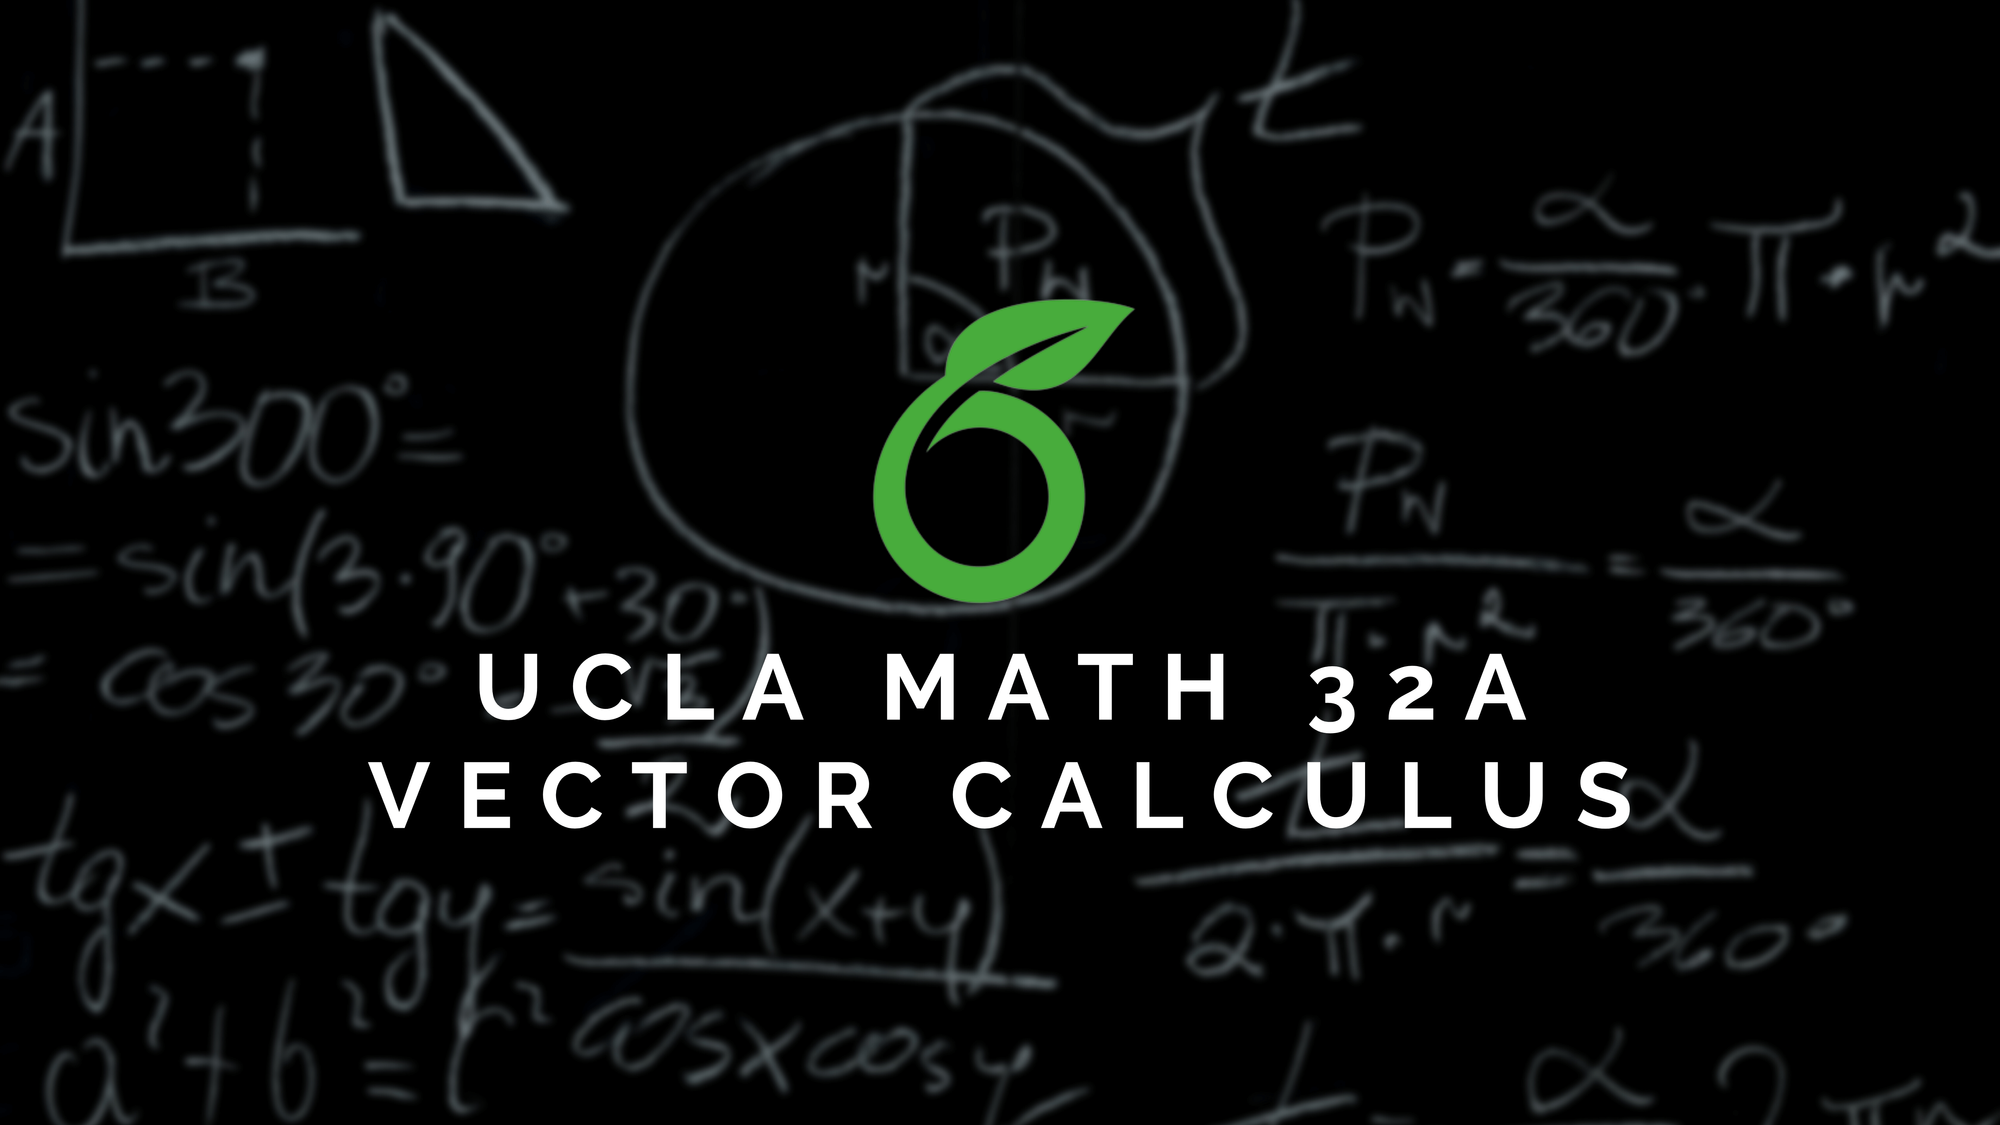 UCLA MATH 32A: Vector Calculus